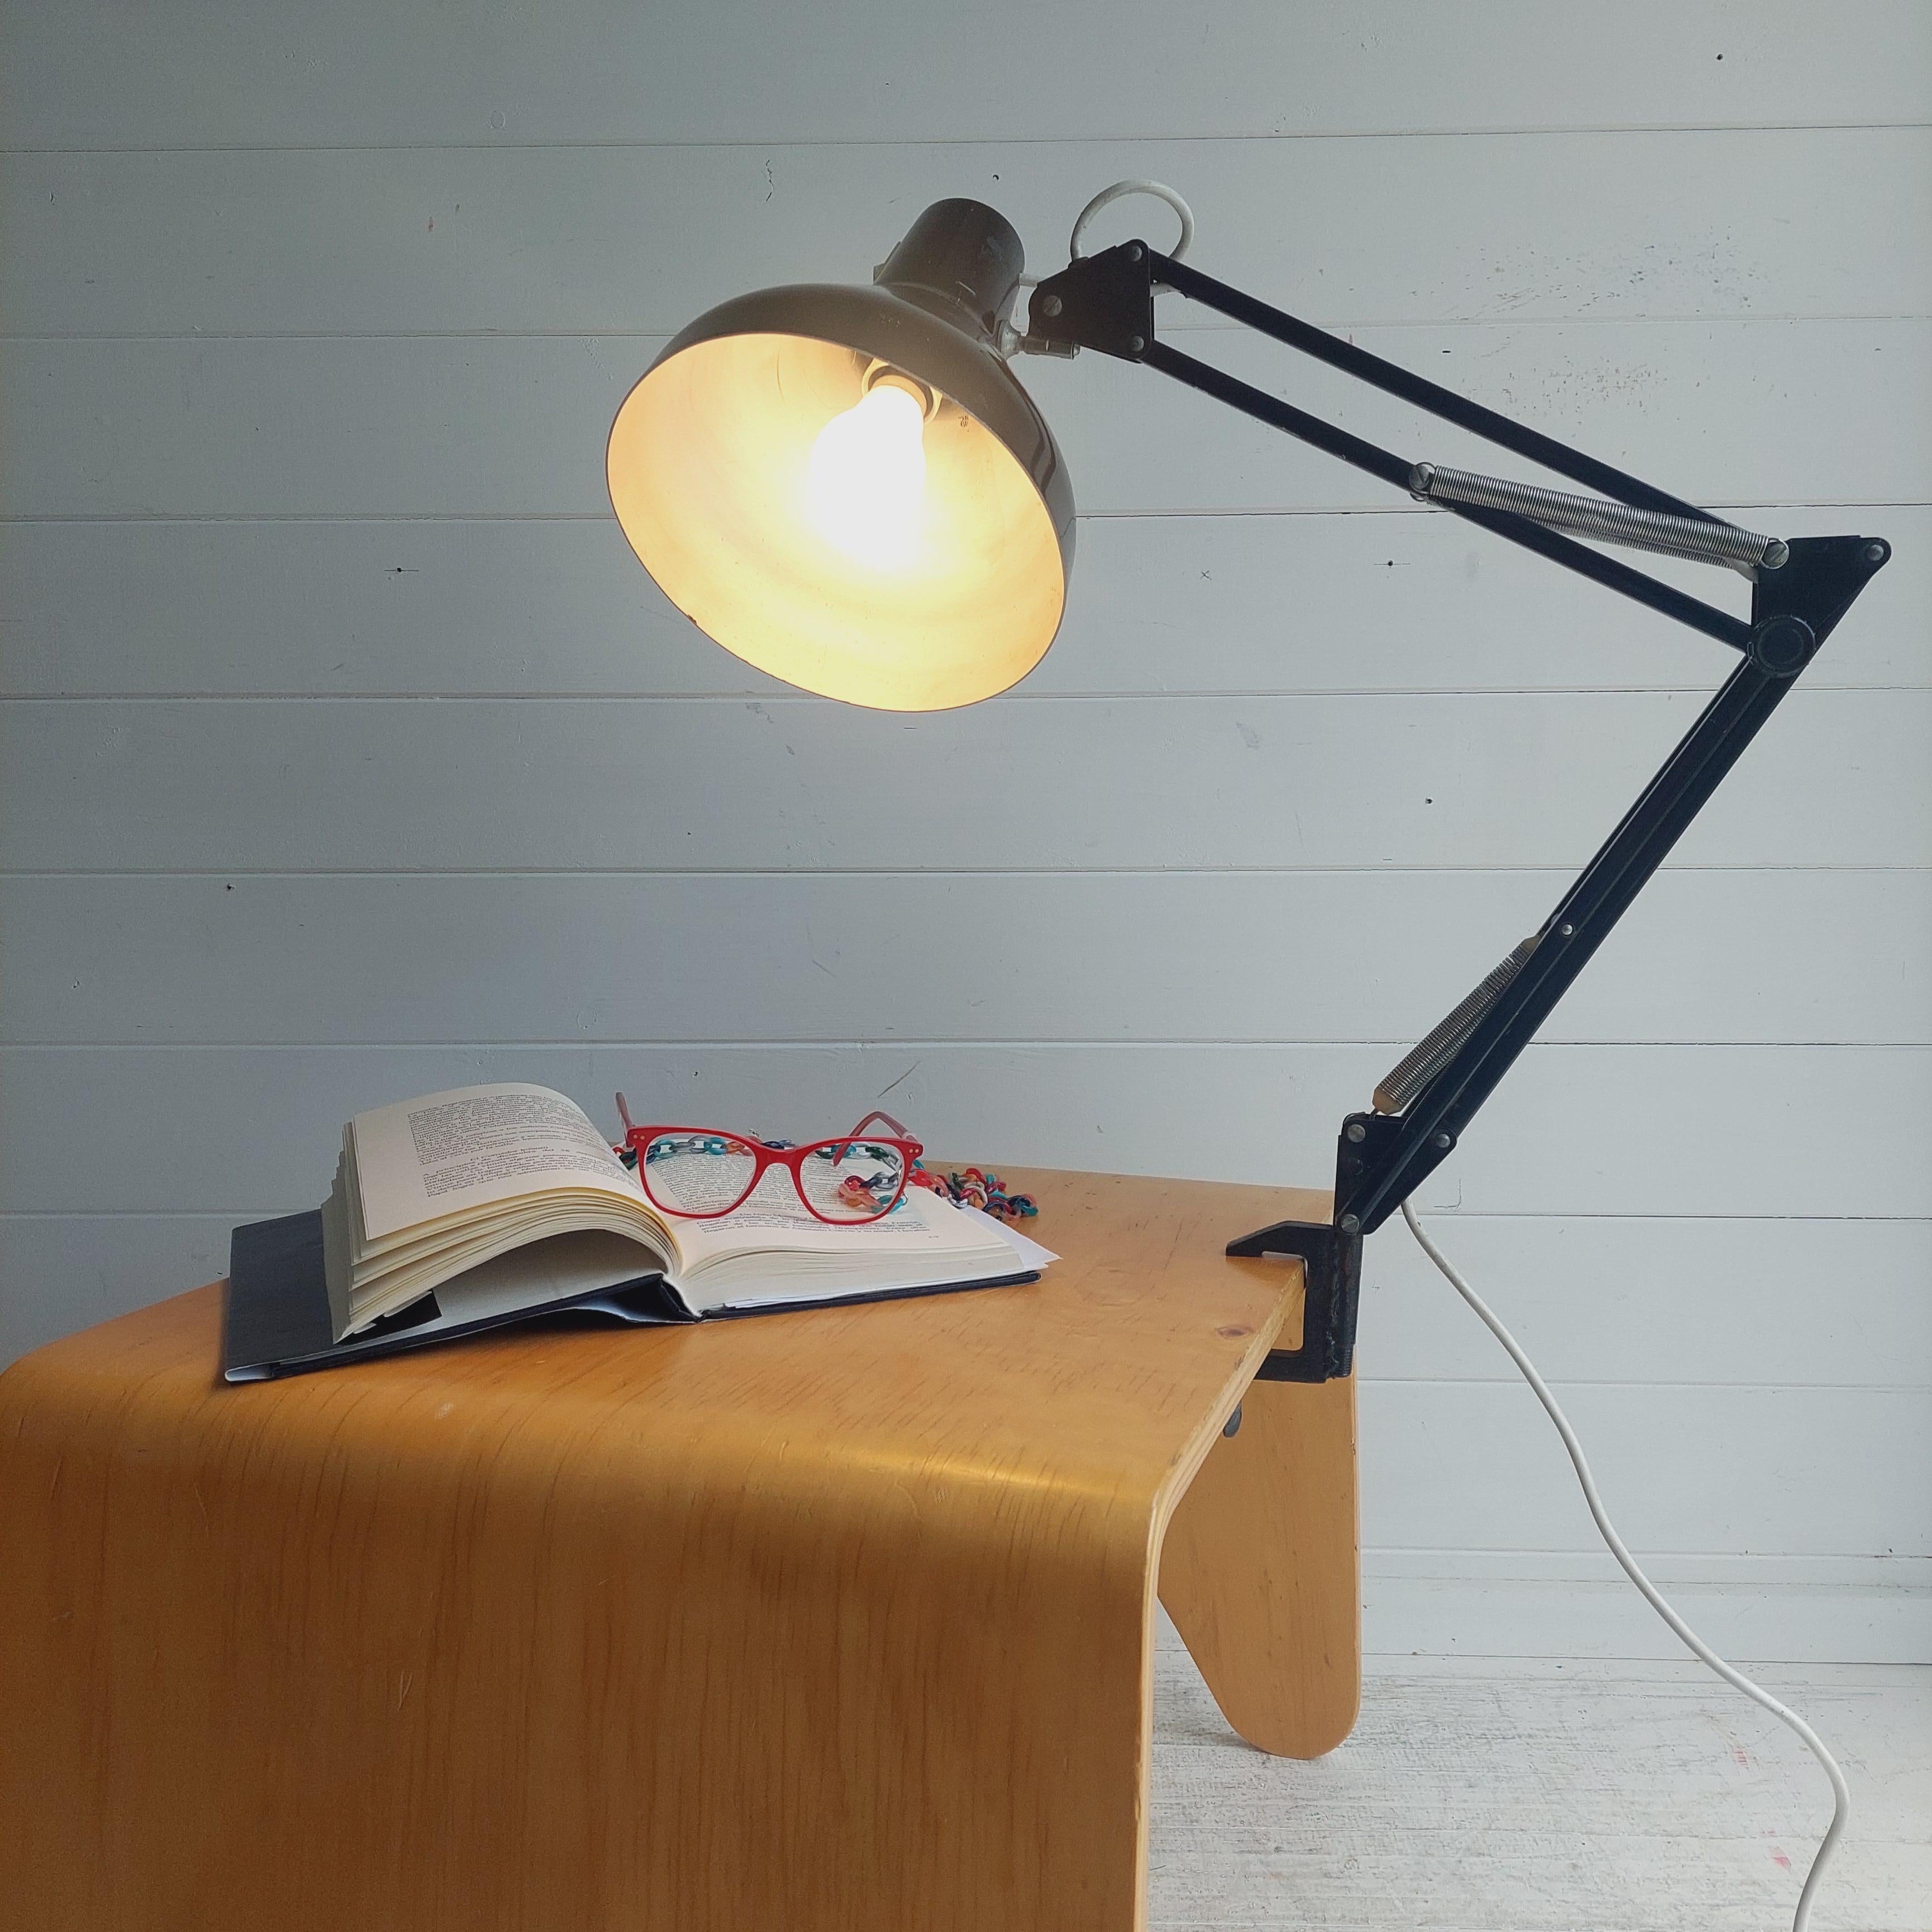 20th Century Mid Century Herbert Terry & Sons Ltd Black Anglepoise Desk/Wall Clamp Lamp, 60s